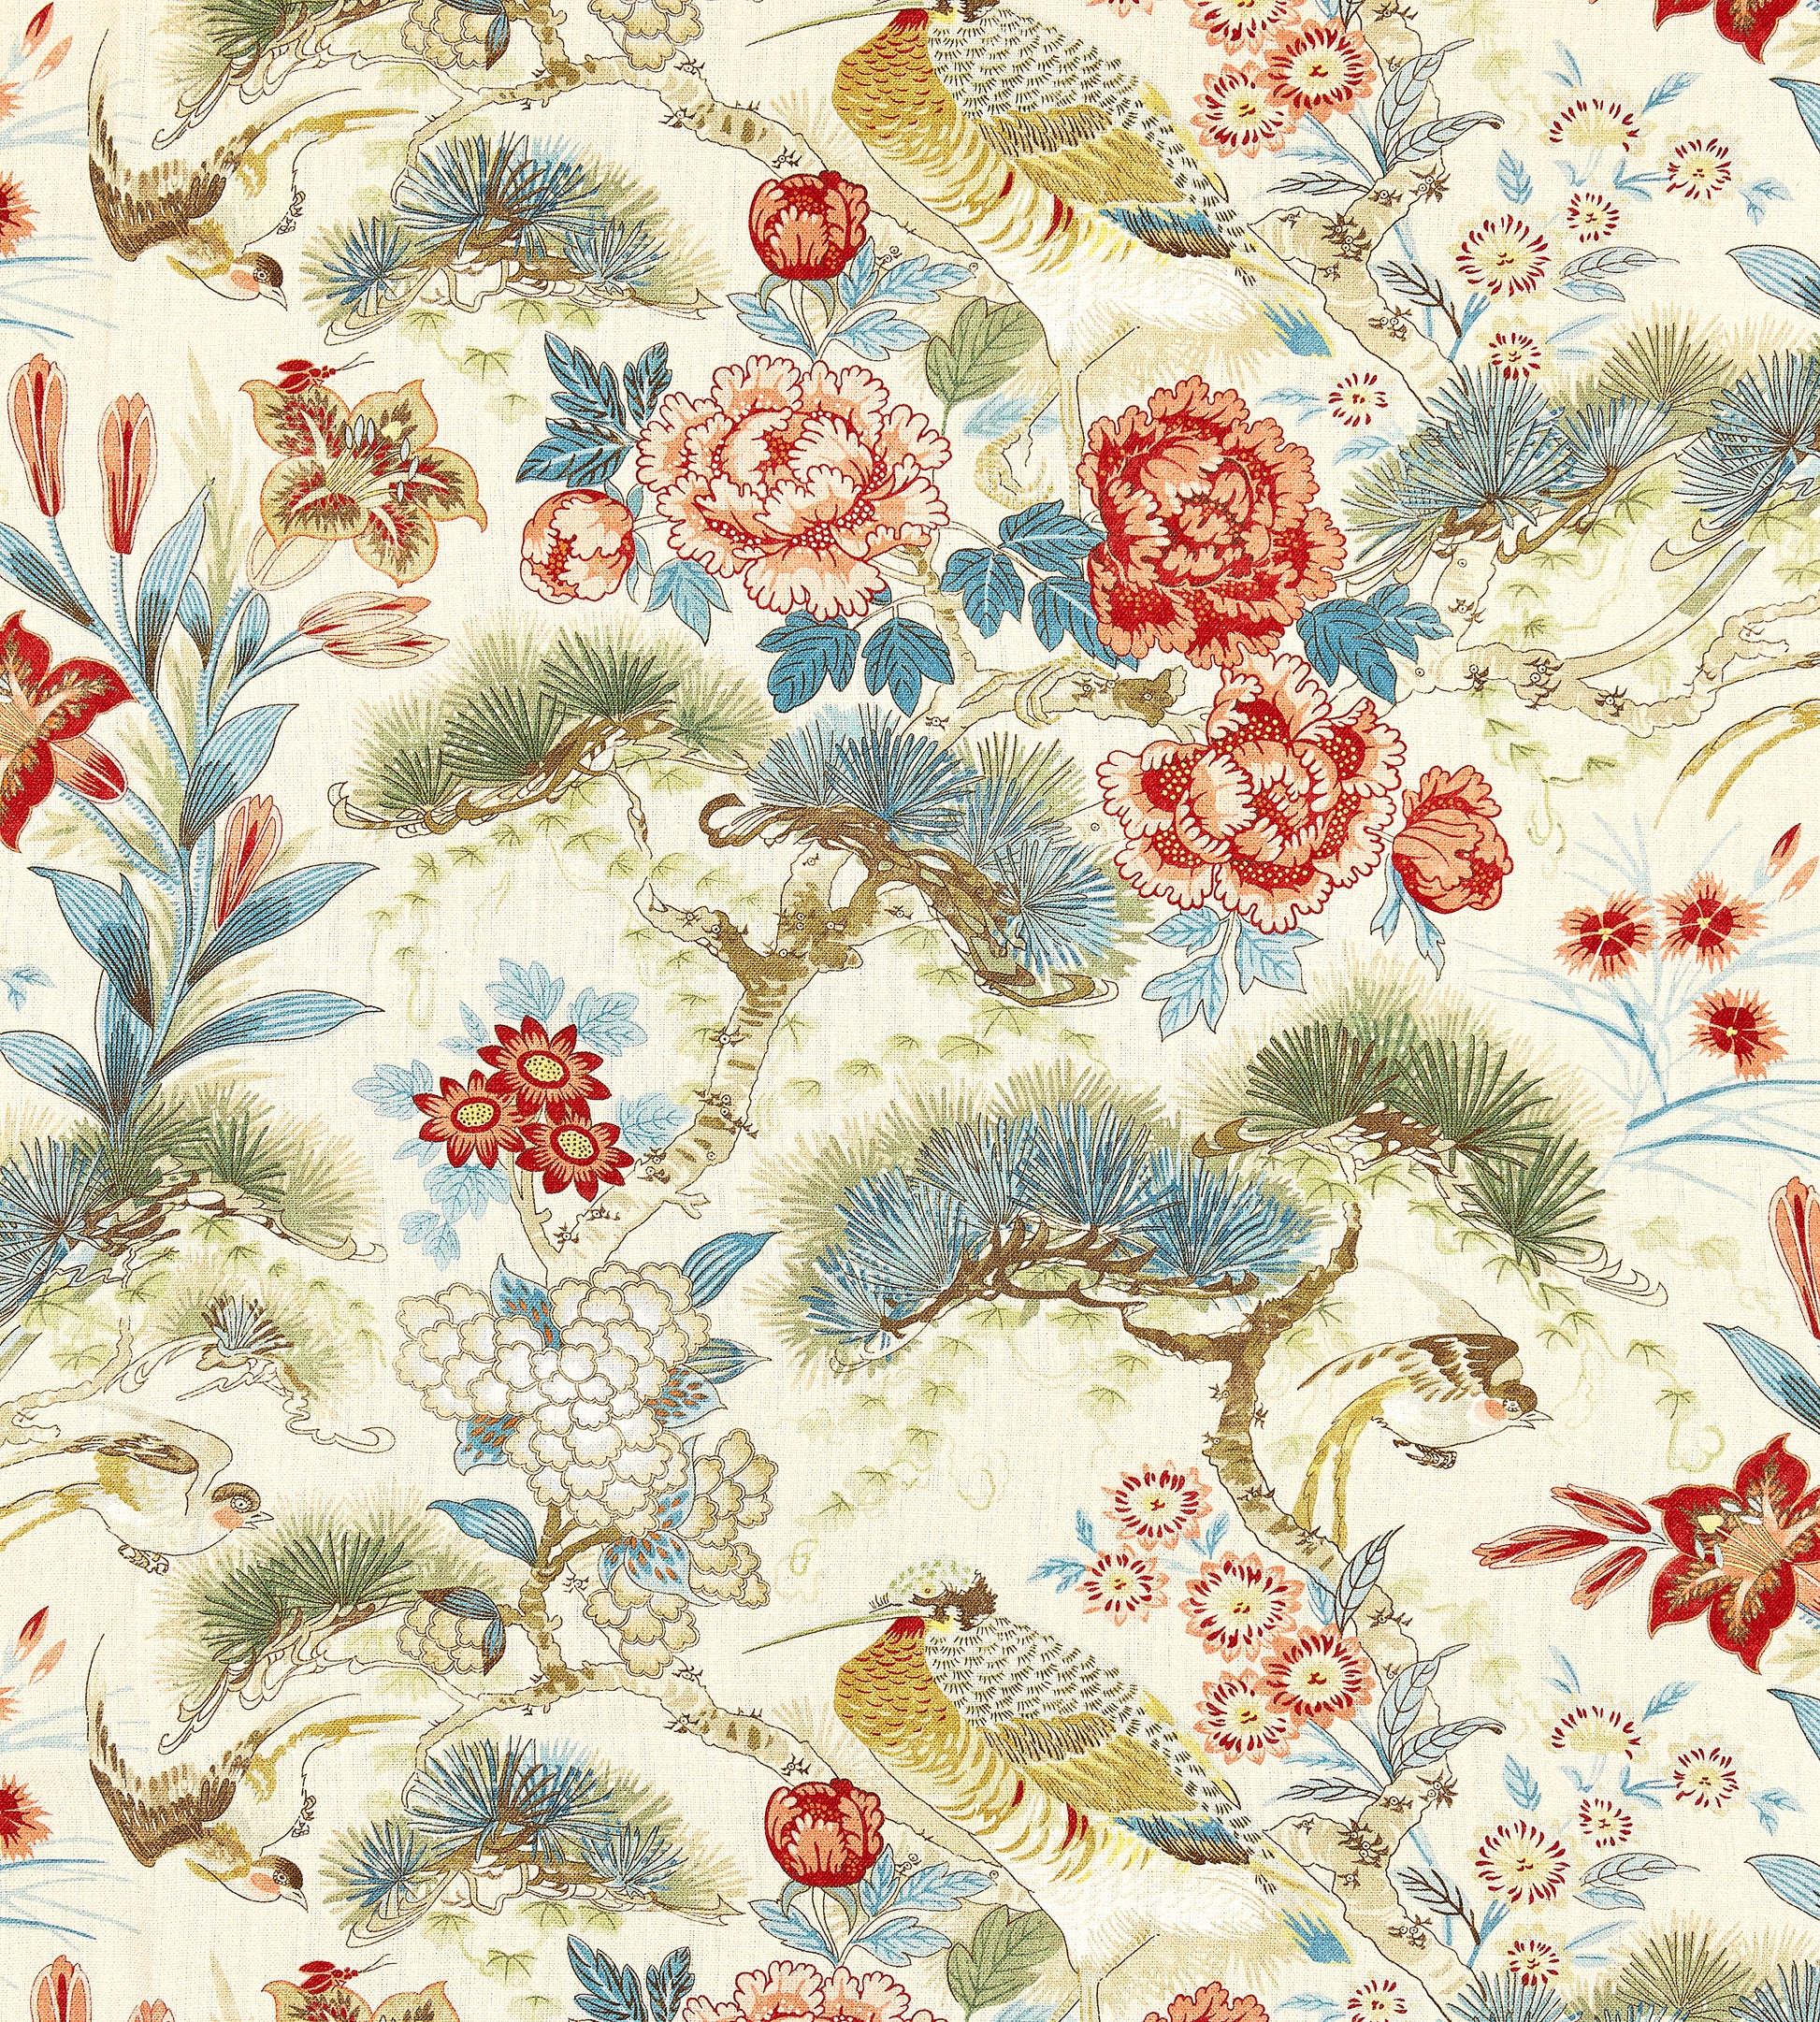 Purchase Scalamandre Fabric Pattern number SC 000416601, Shenyang Linen Print Sandalwood 1